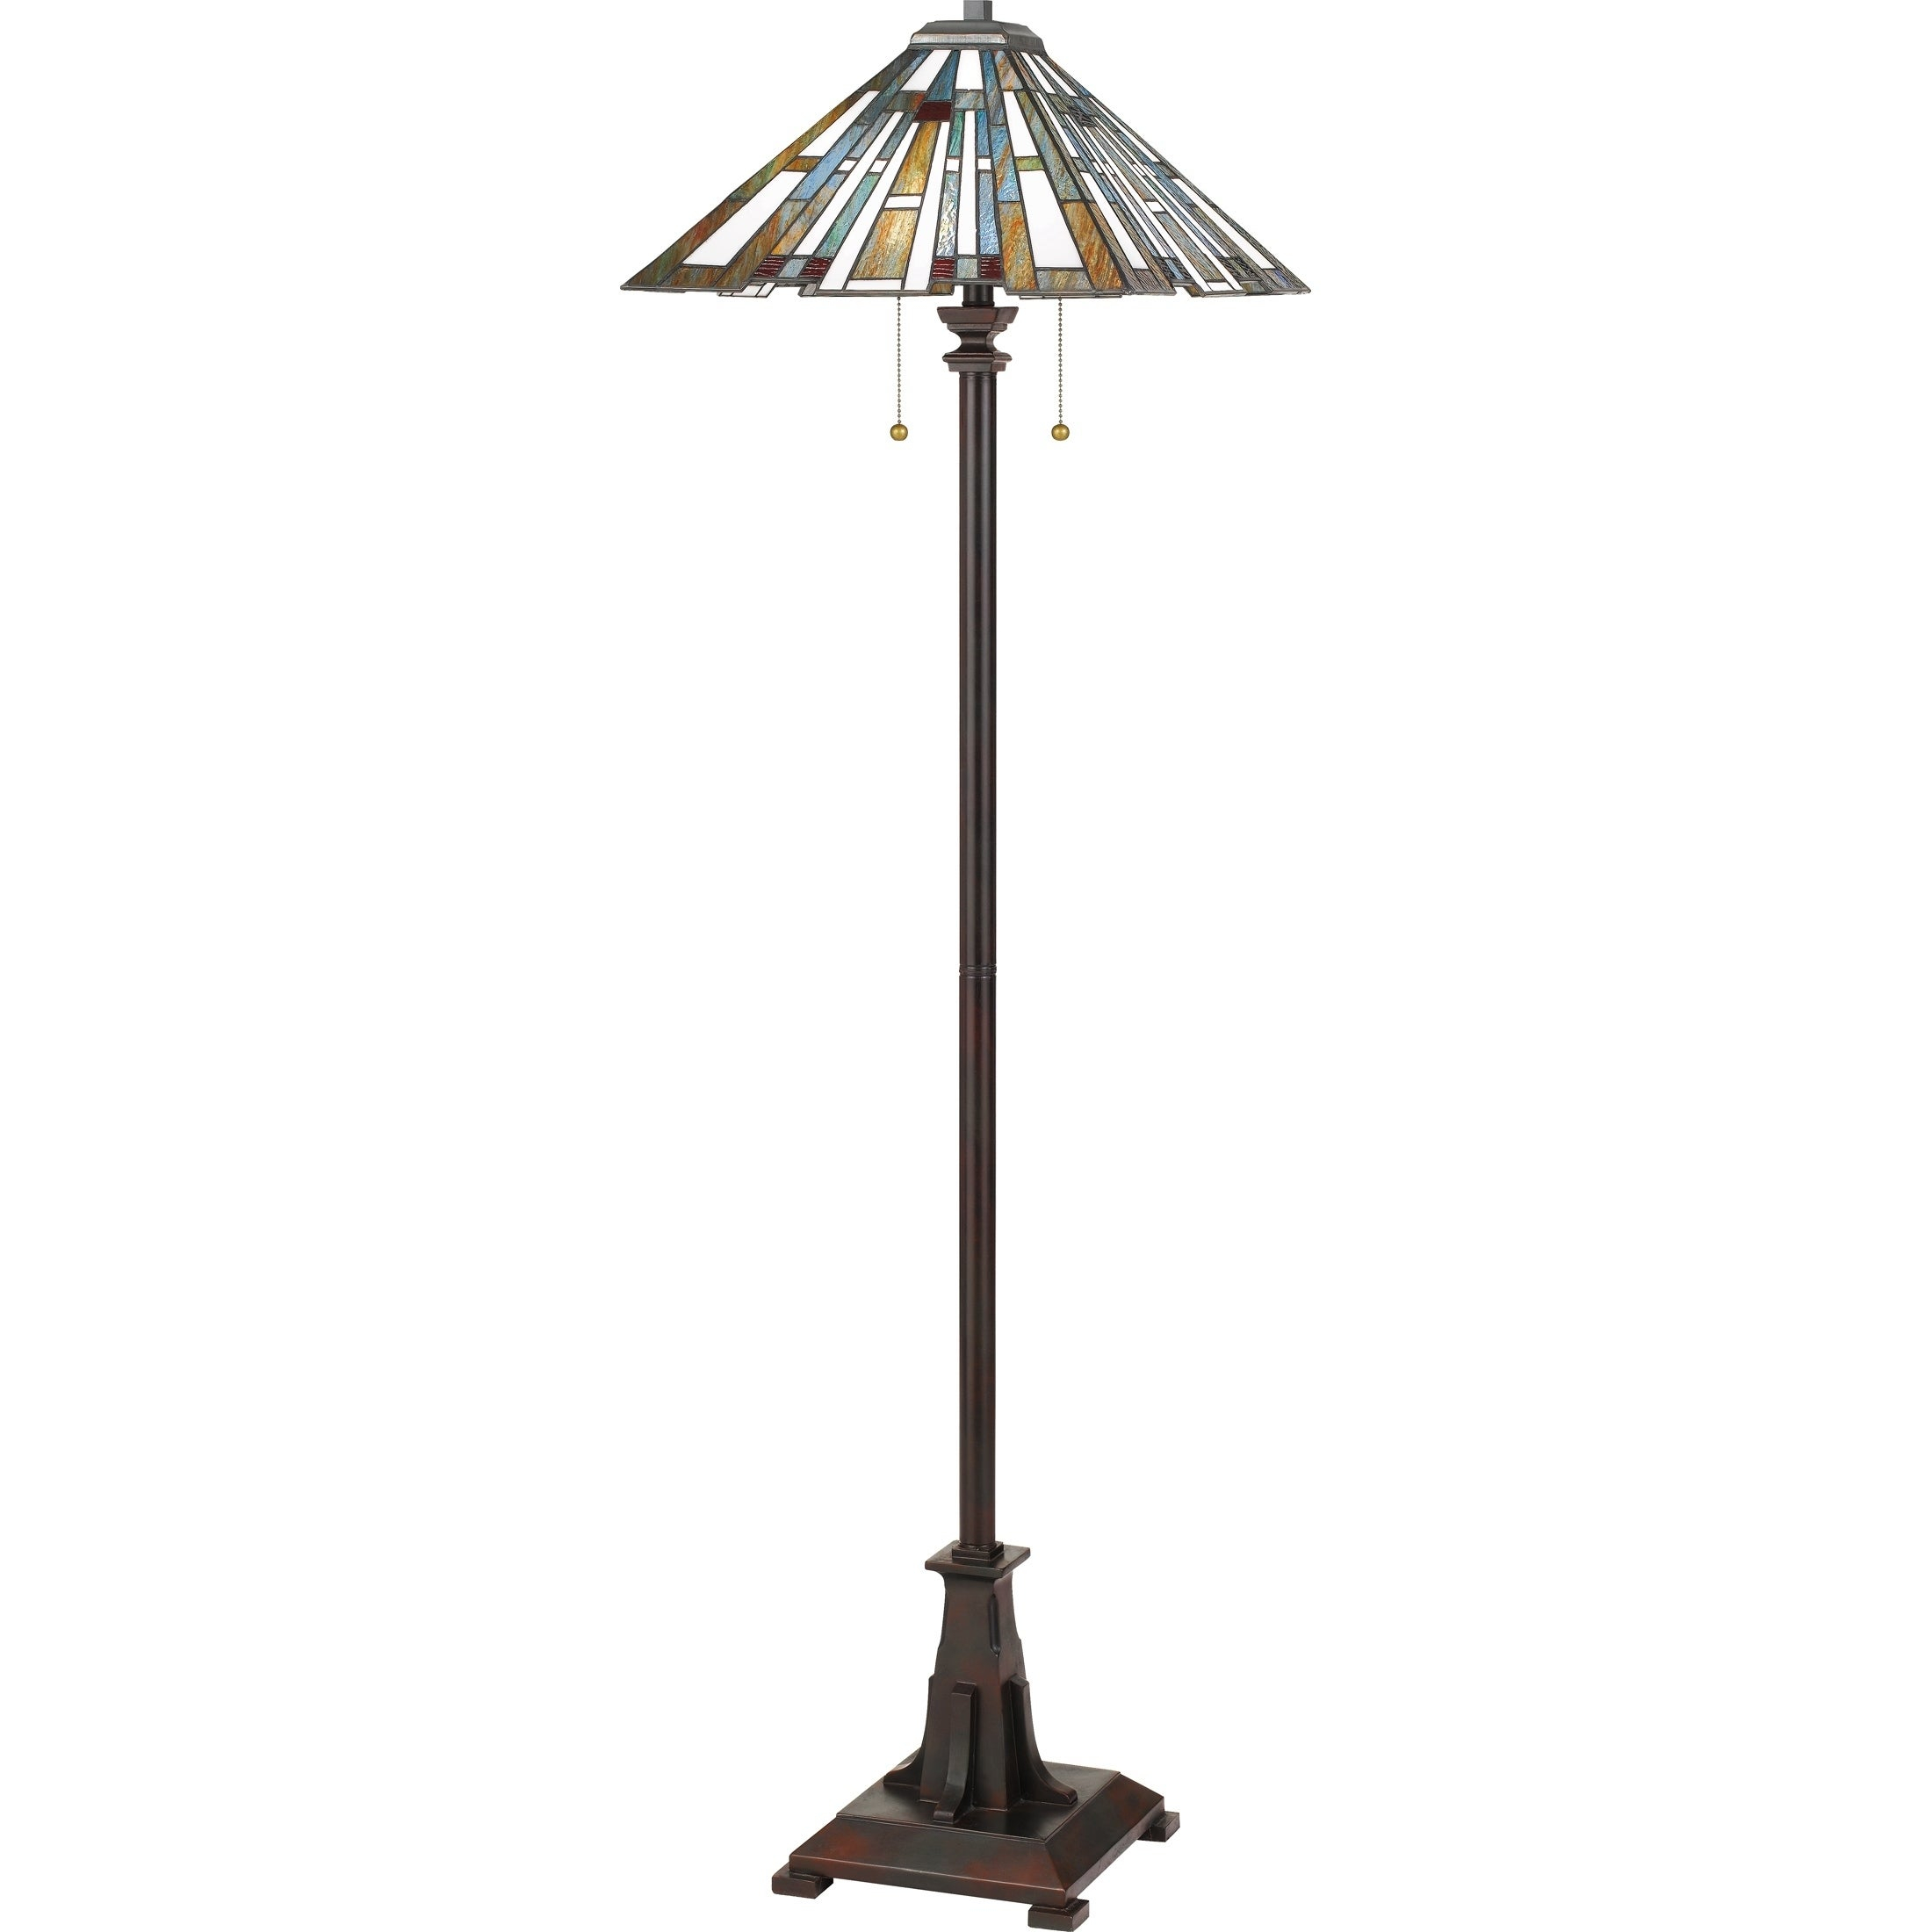 Quoizel Maybeck Valiant Bronze 2 Light Tiffany Floor Lamp within sizing 2200 X 2200